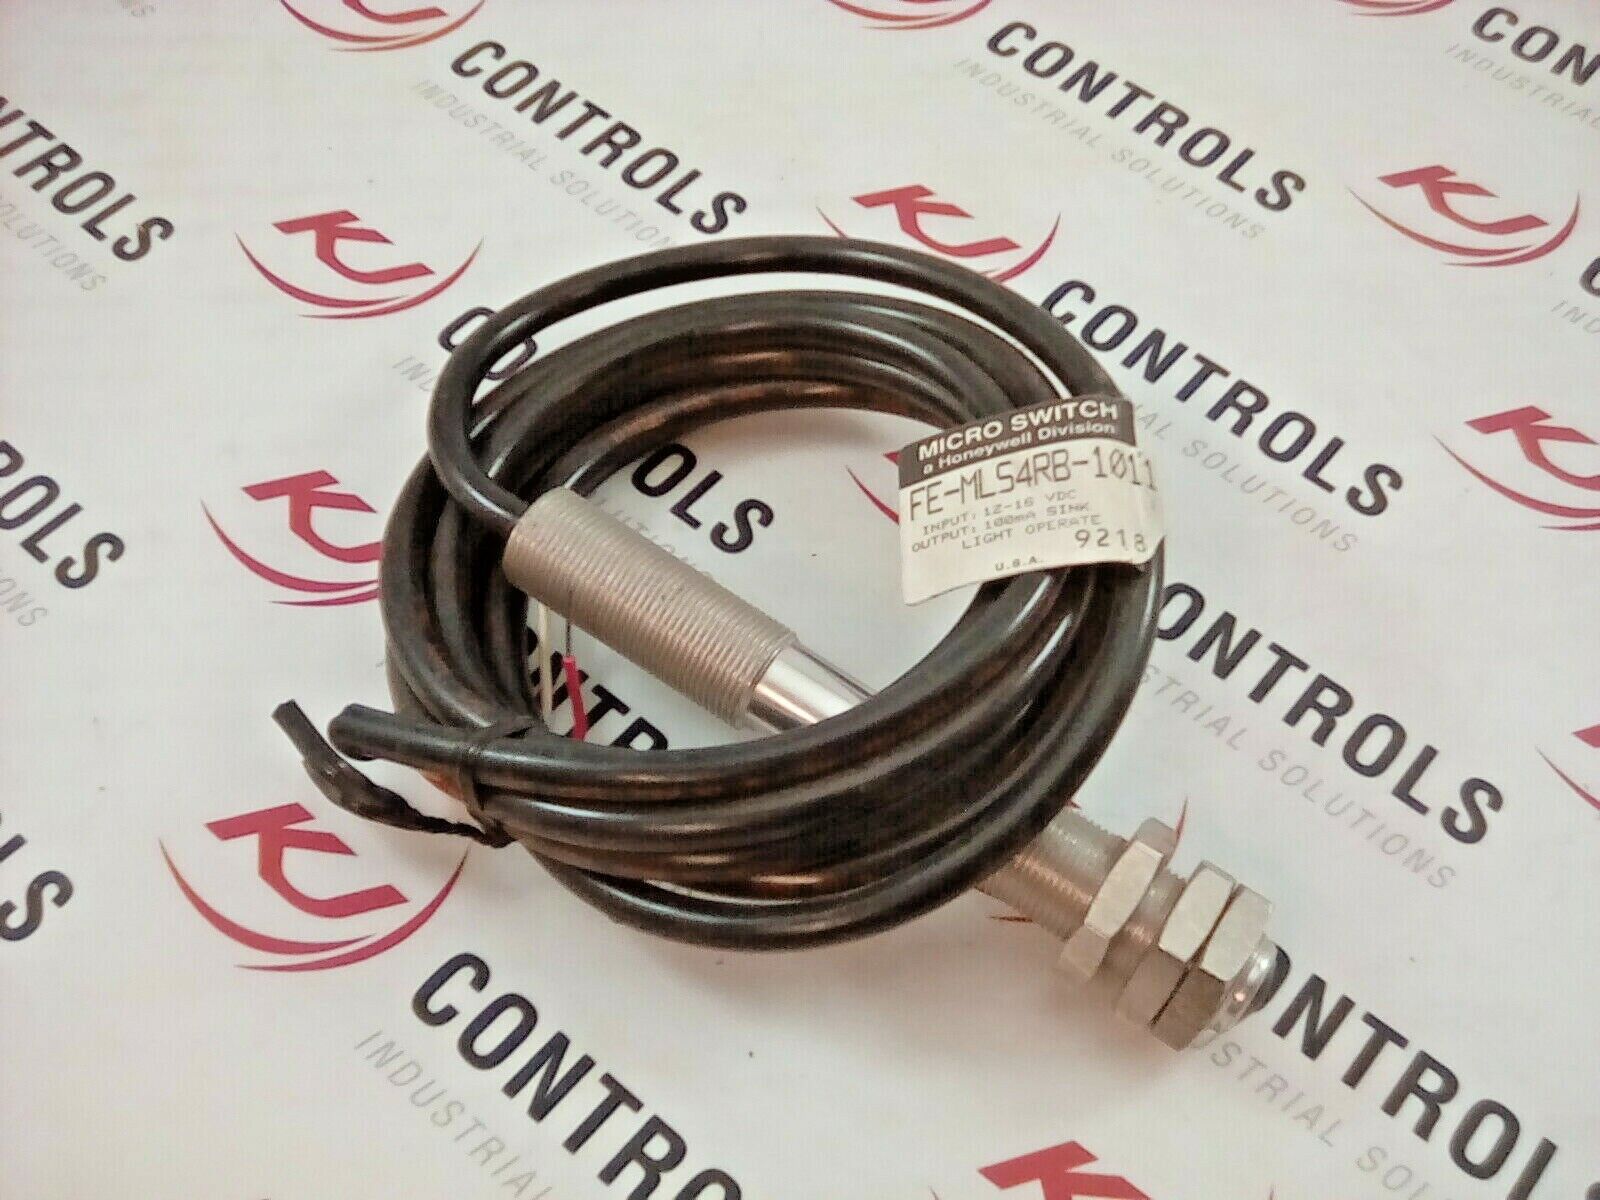 Honeywell FE-MLS4RB-1011 Micro Switch Photoelectric Sensor Receiver 12-16VDC